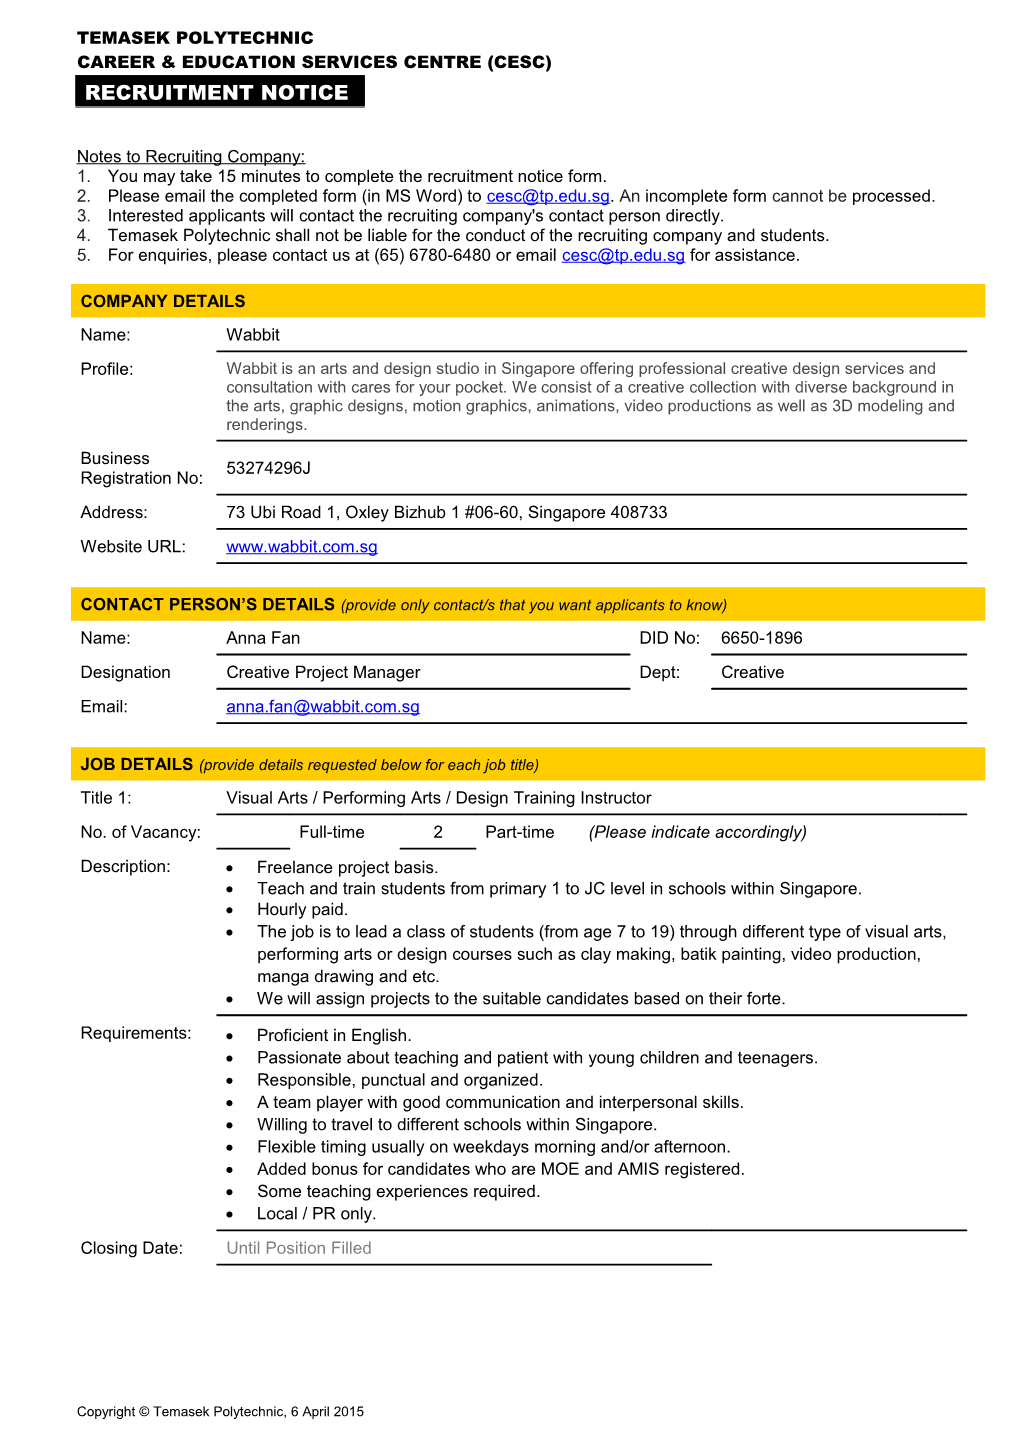 CCAO Recruitment Notice 2012 (20 Nov)